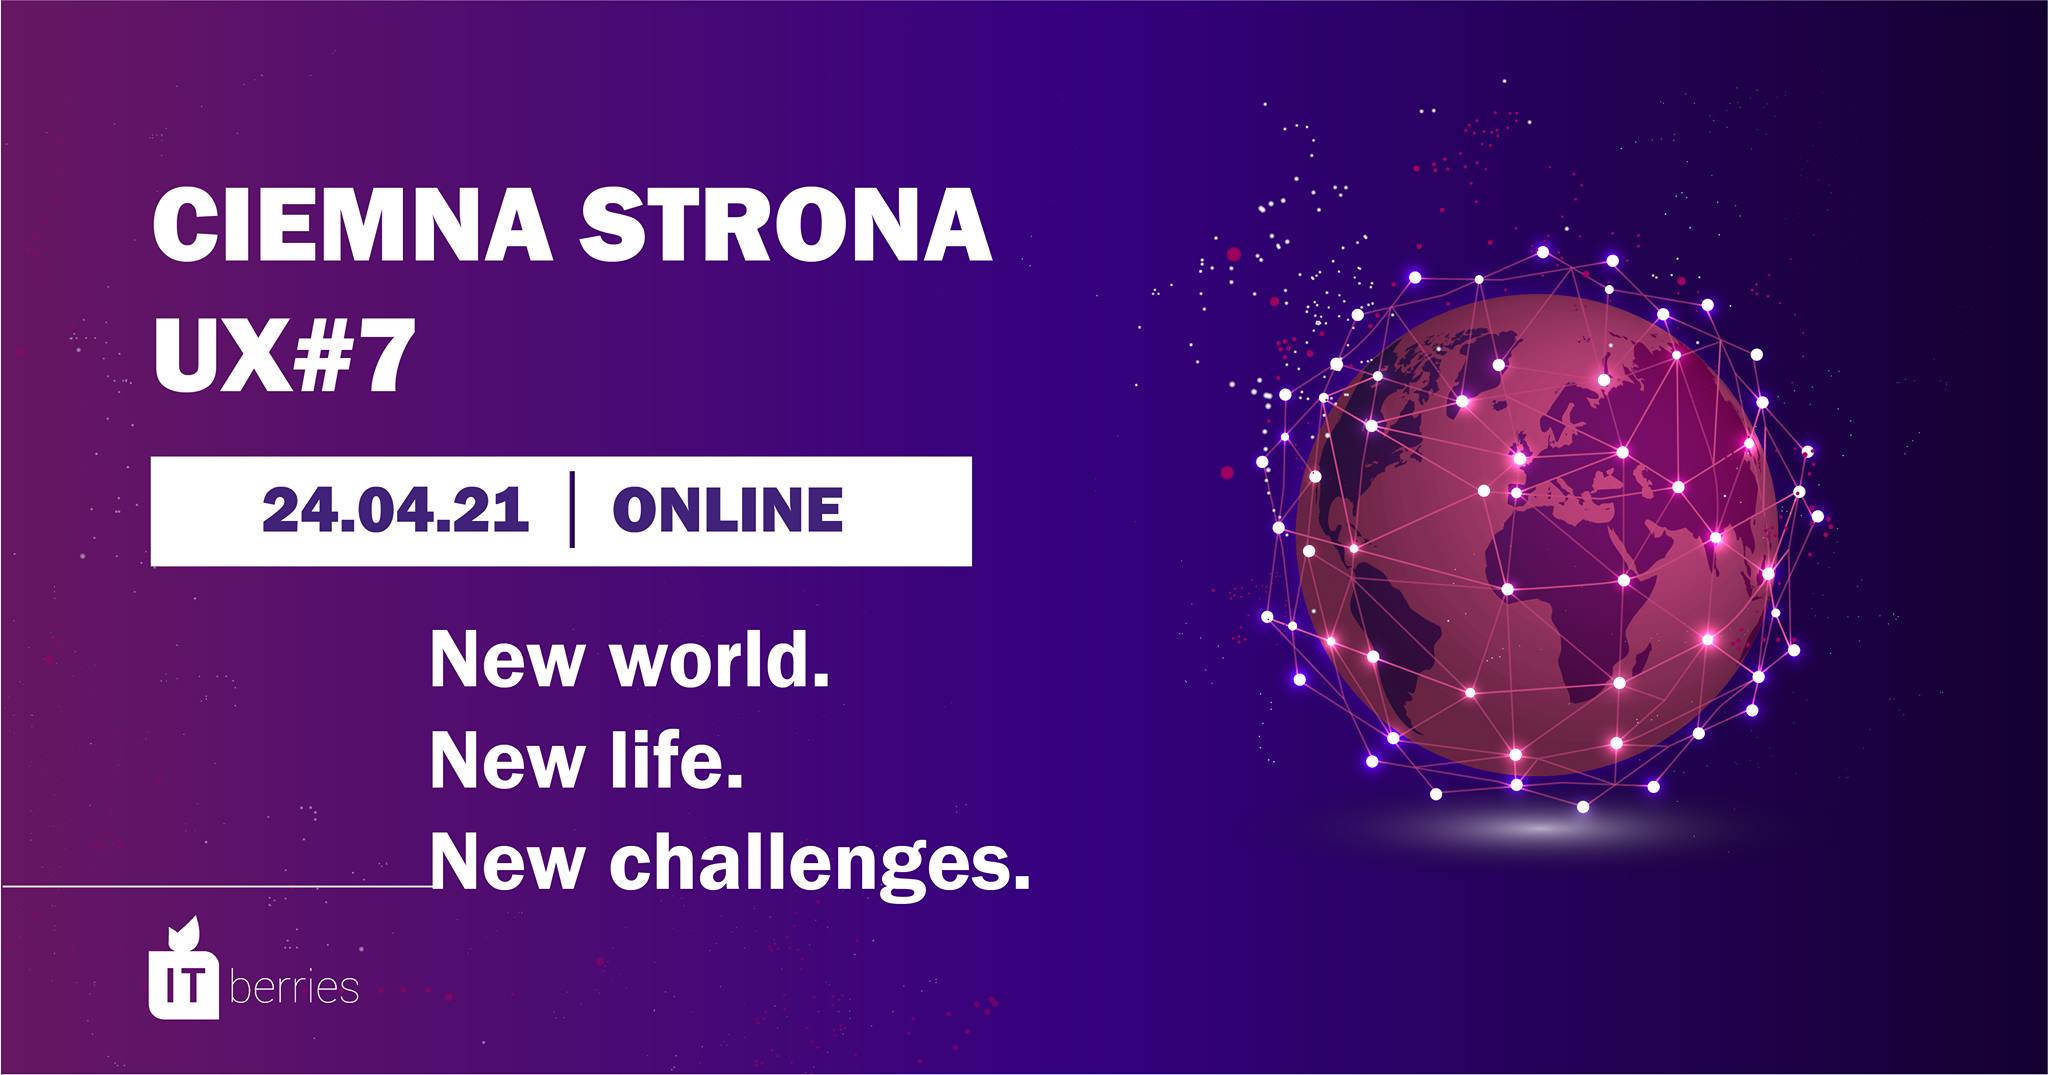 ciemna-strona-ux7-new-world-new-life-new-challenges